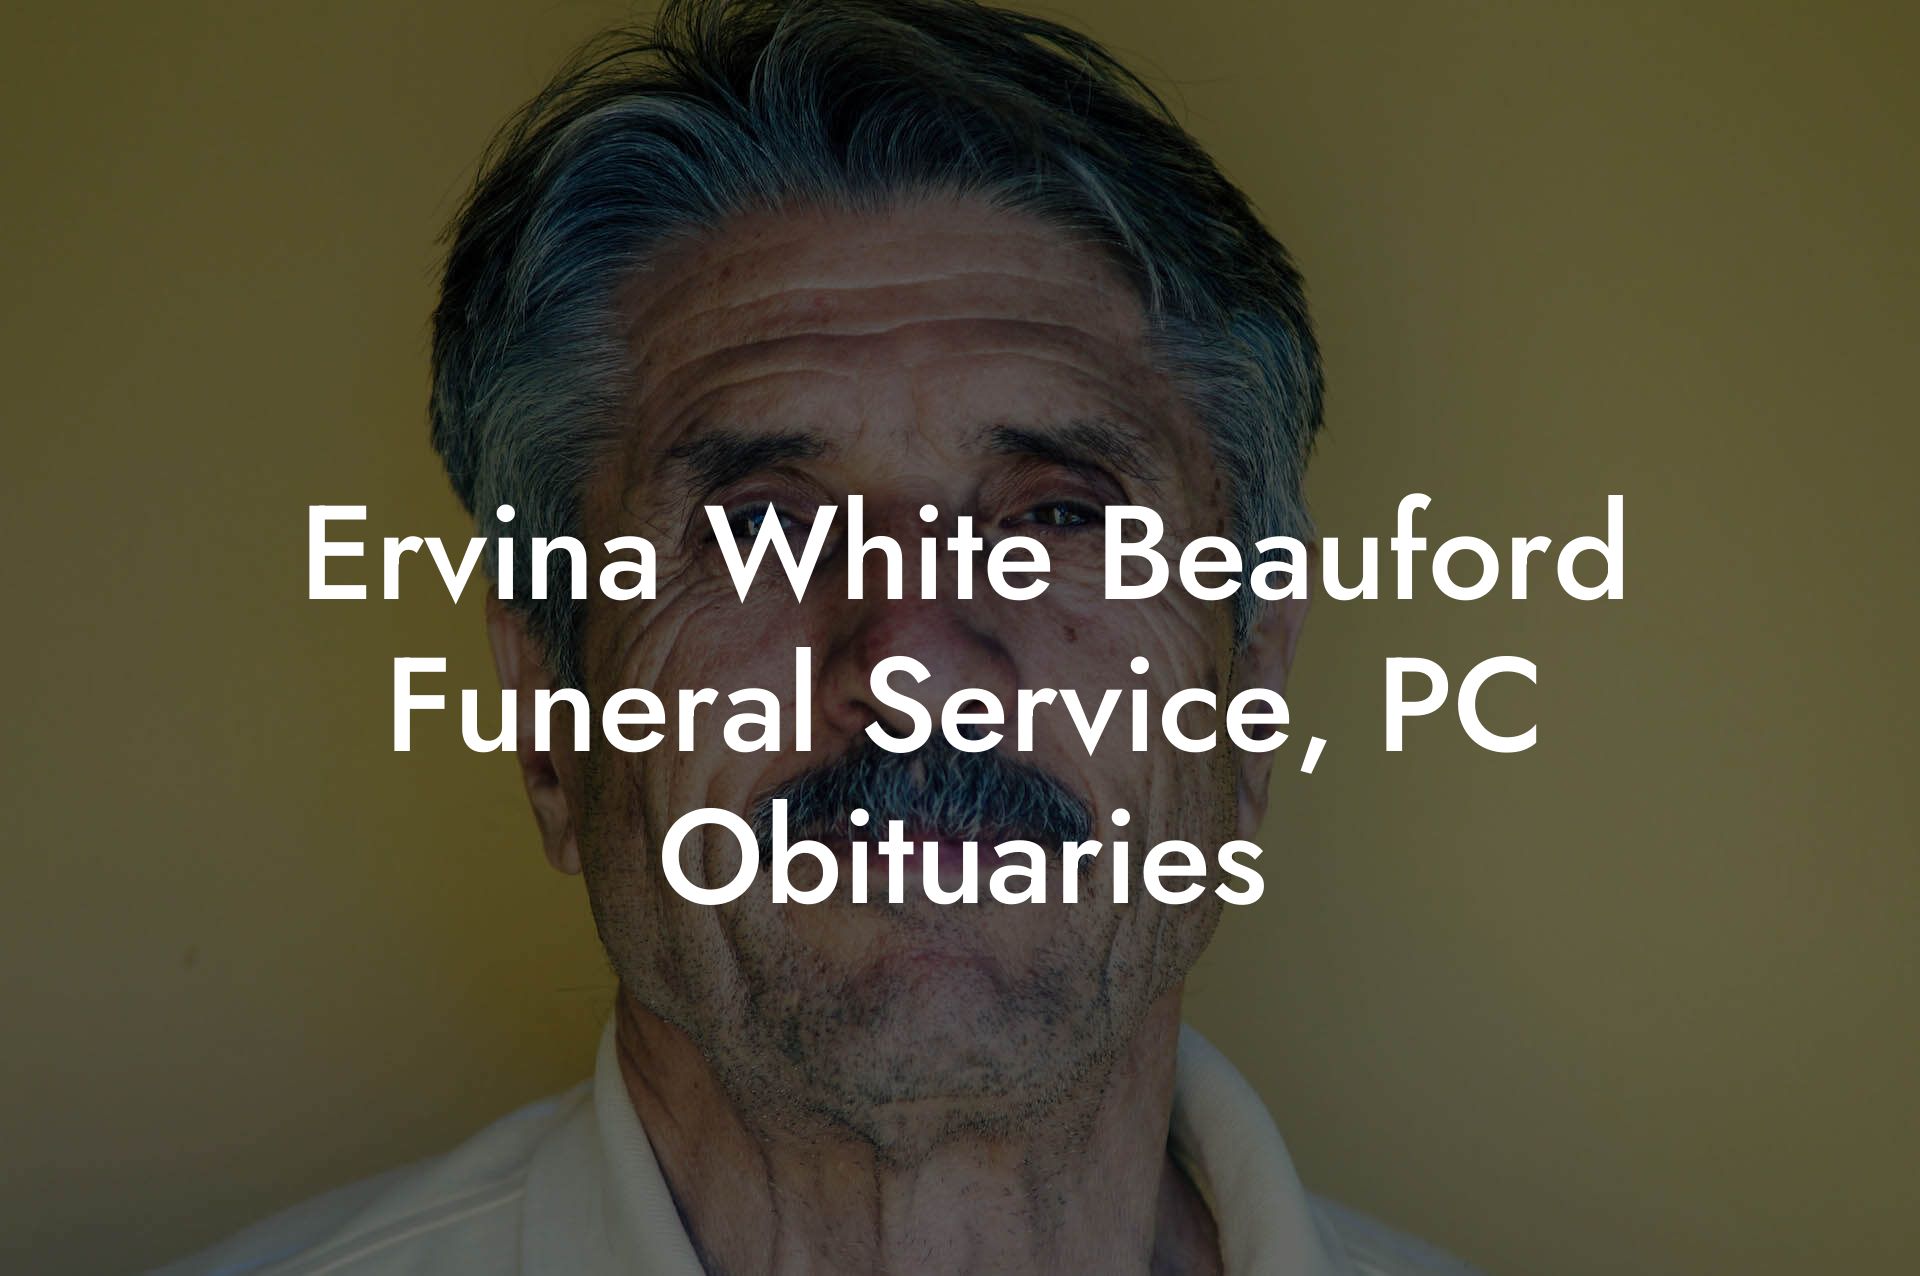 Ervina White Beauford Funeral Service, P.C. Obituaries